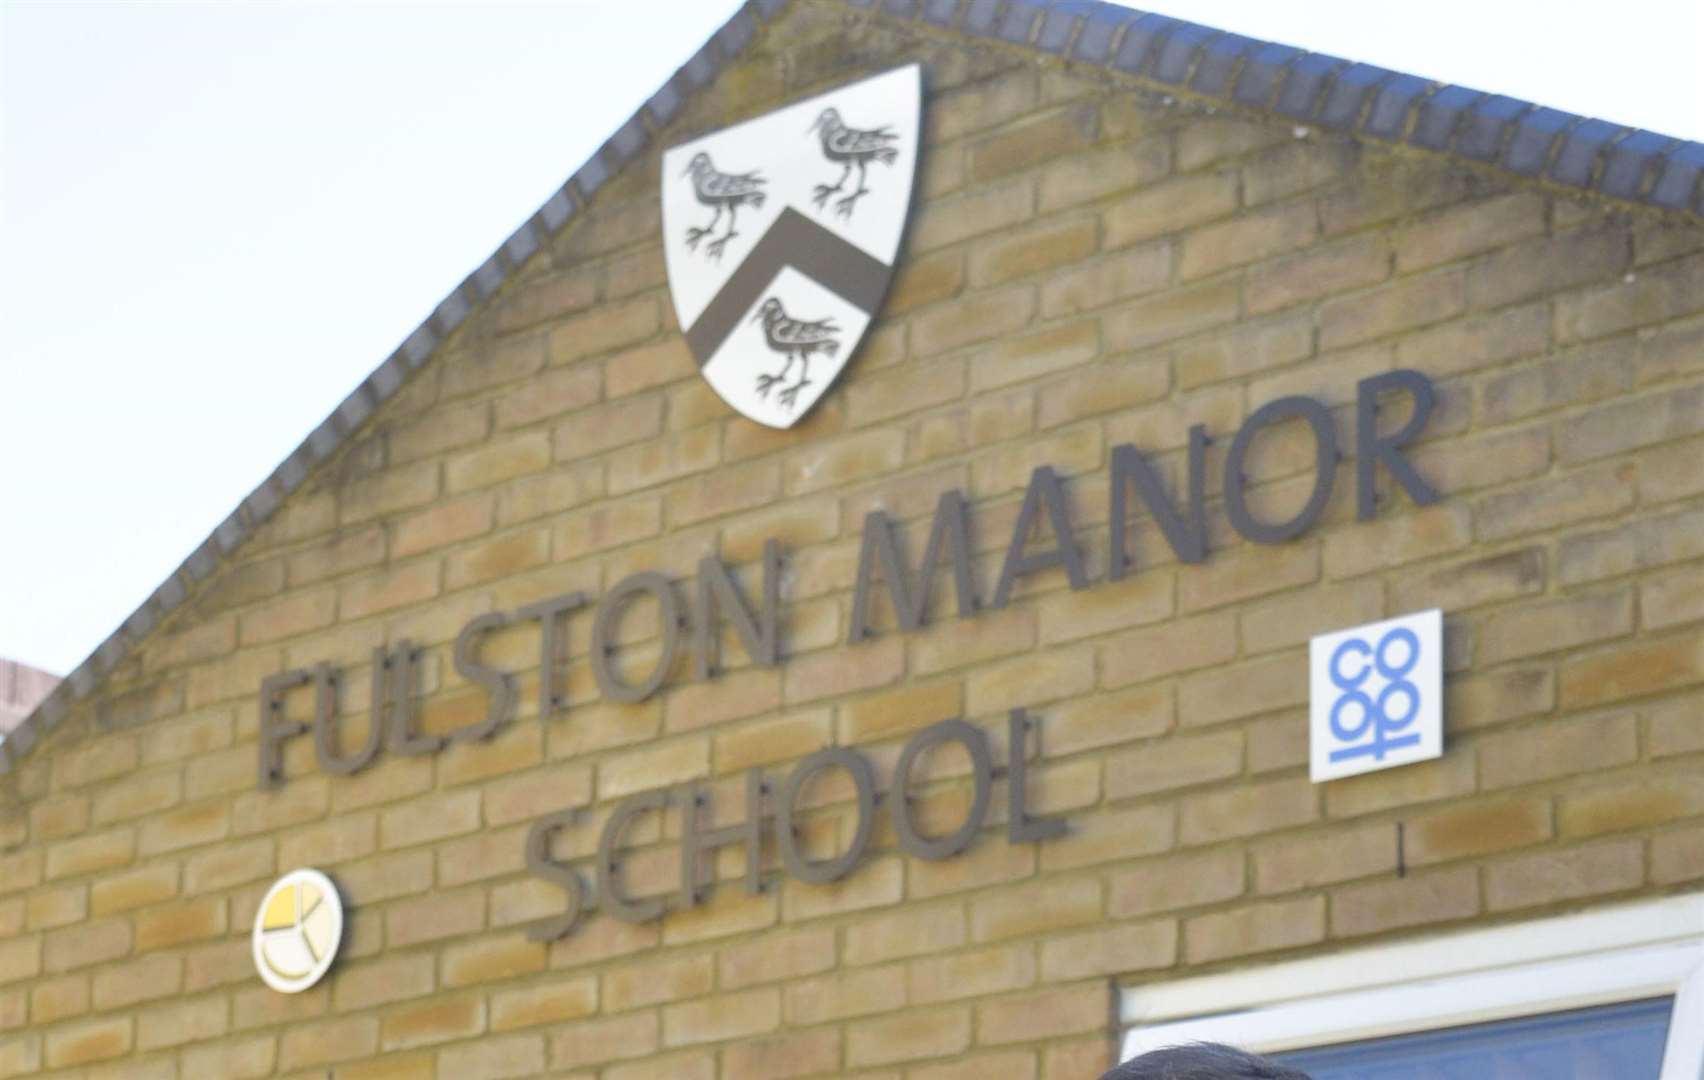 Fulston Manor School in Sittingbourne is in lockdown